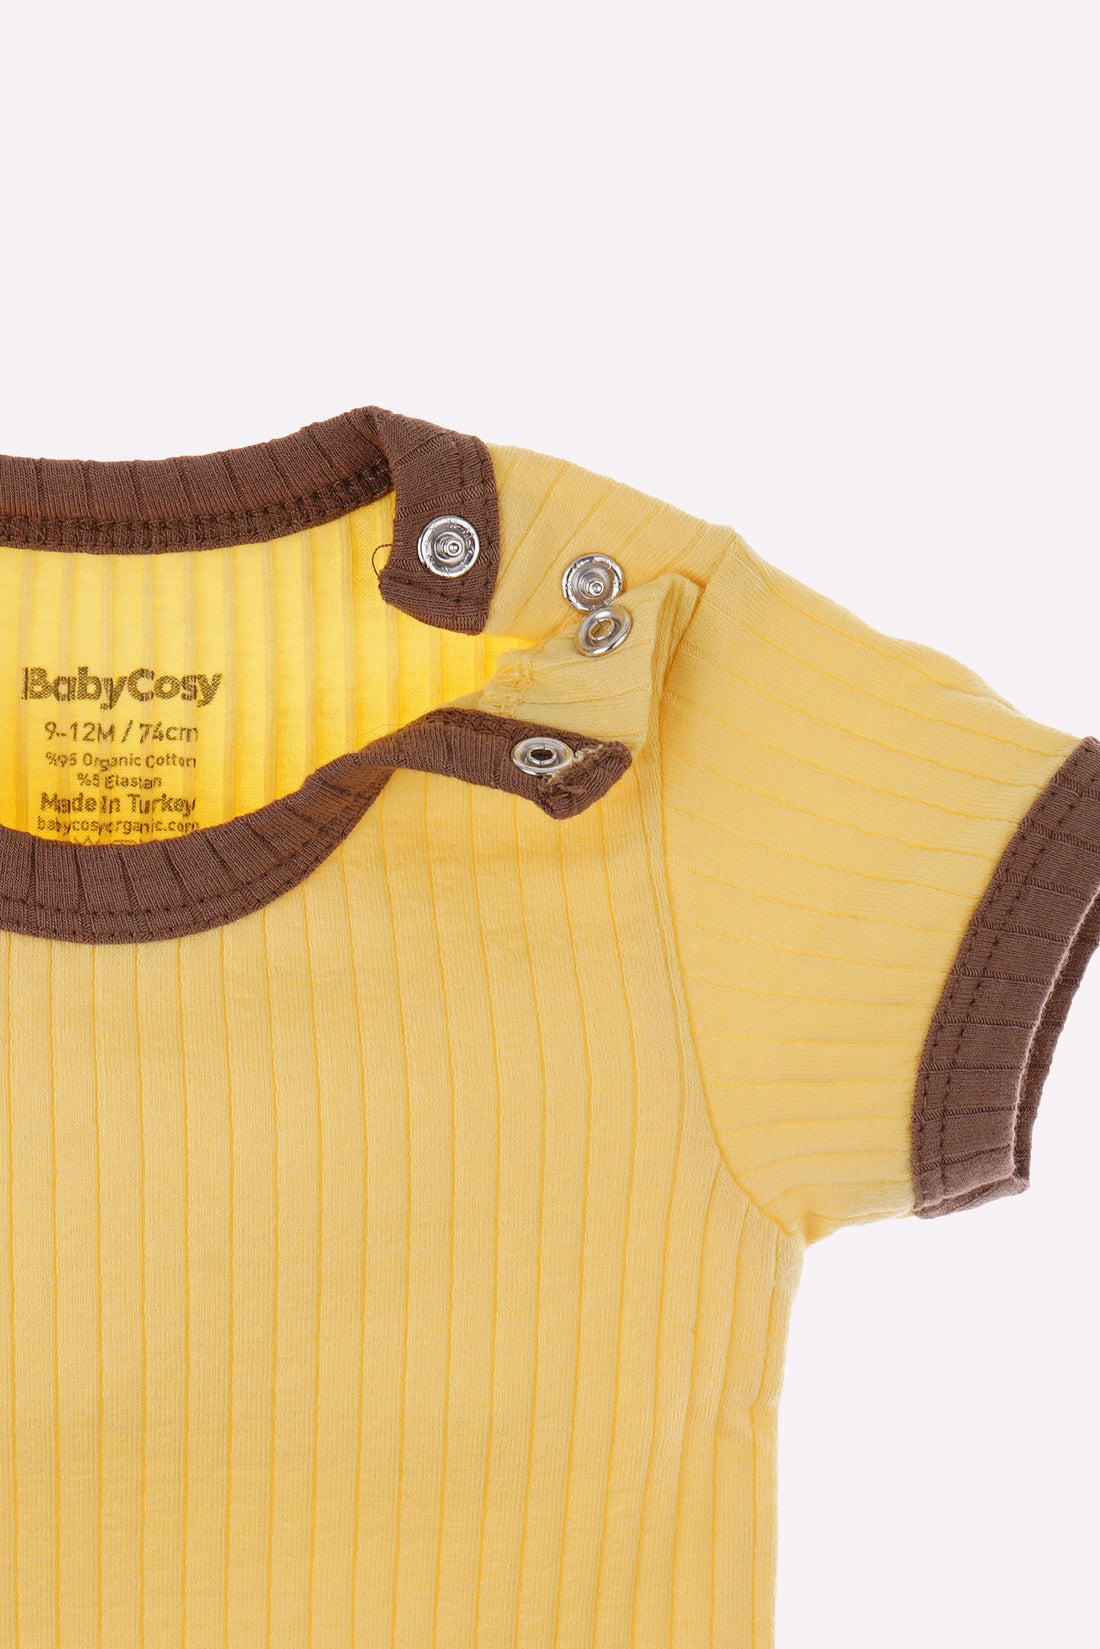 Babycosy Organic Shortsleeves Bodysuit Set of 2 (Vanilla Brown)